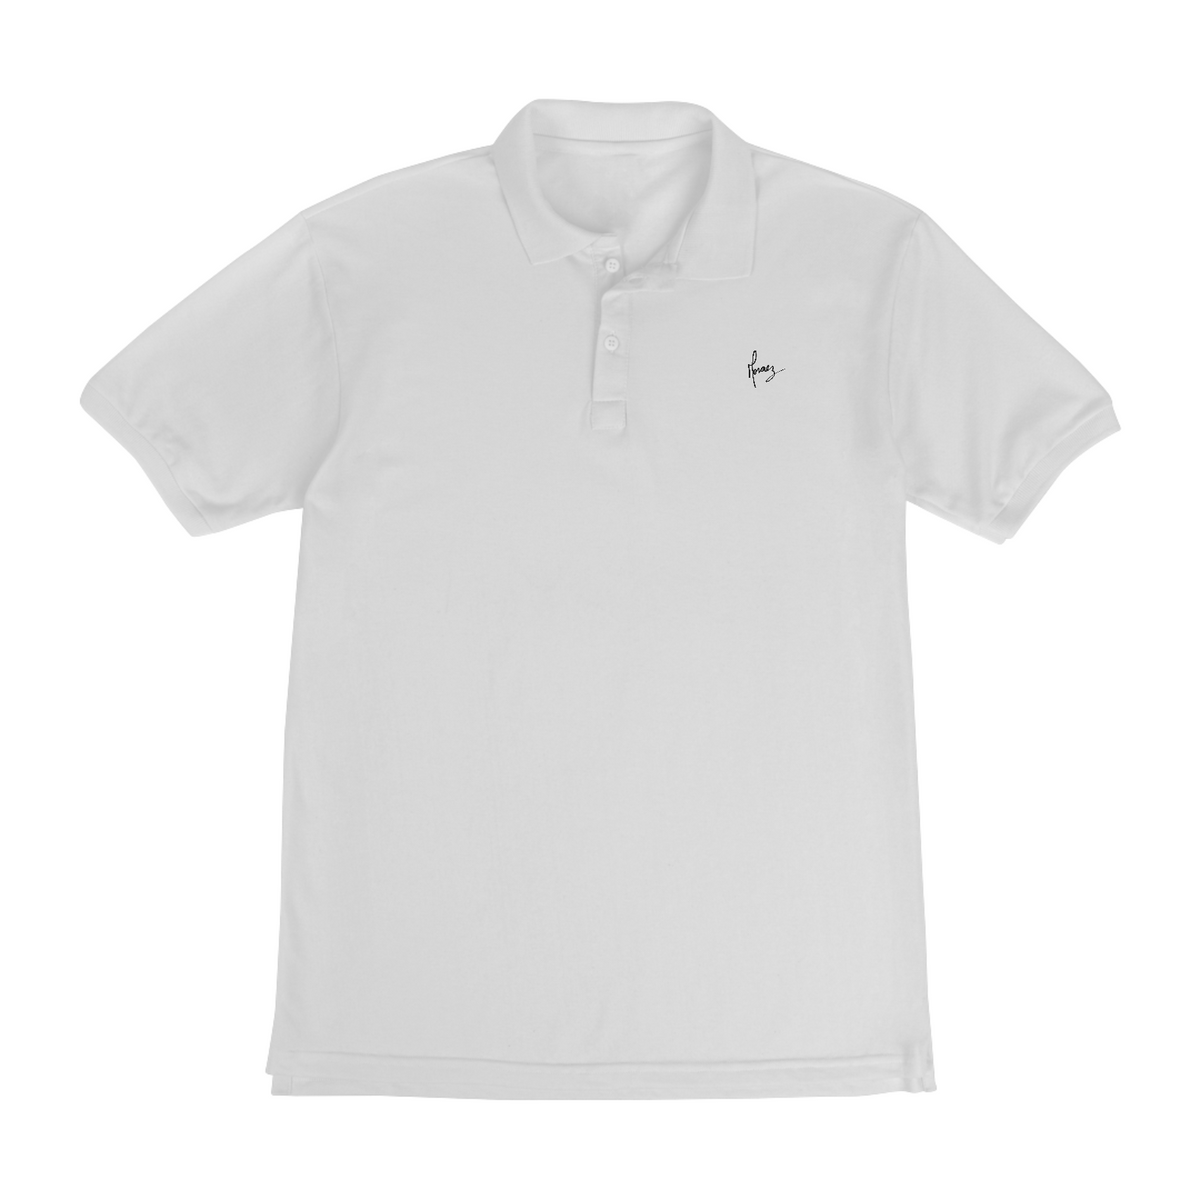 Nome do produto: Camisa Moraez® Polo Basic Sign  #240416u